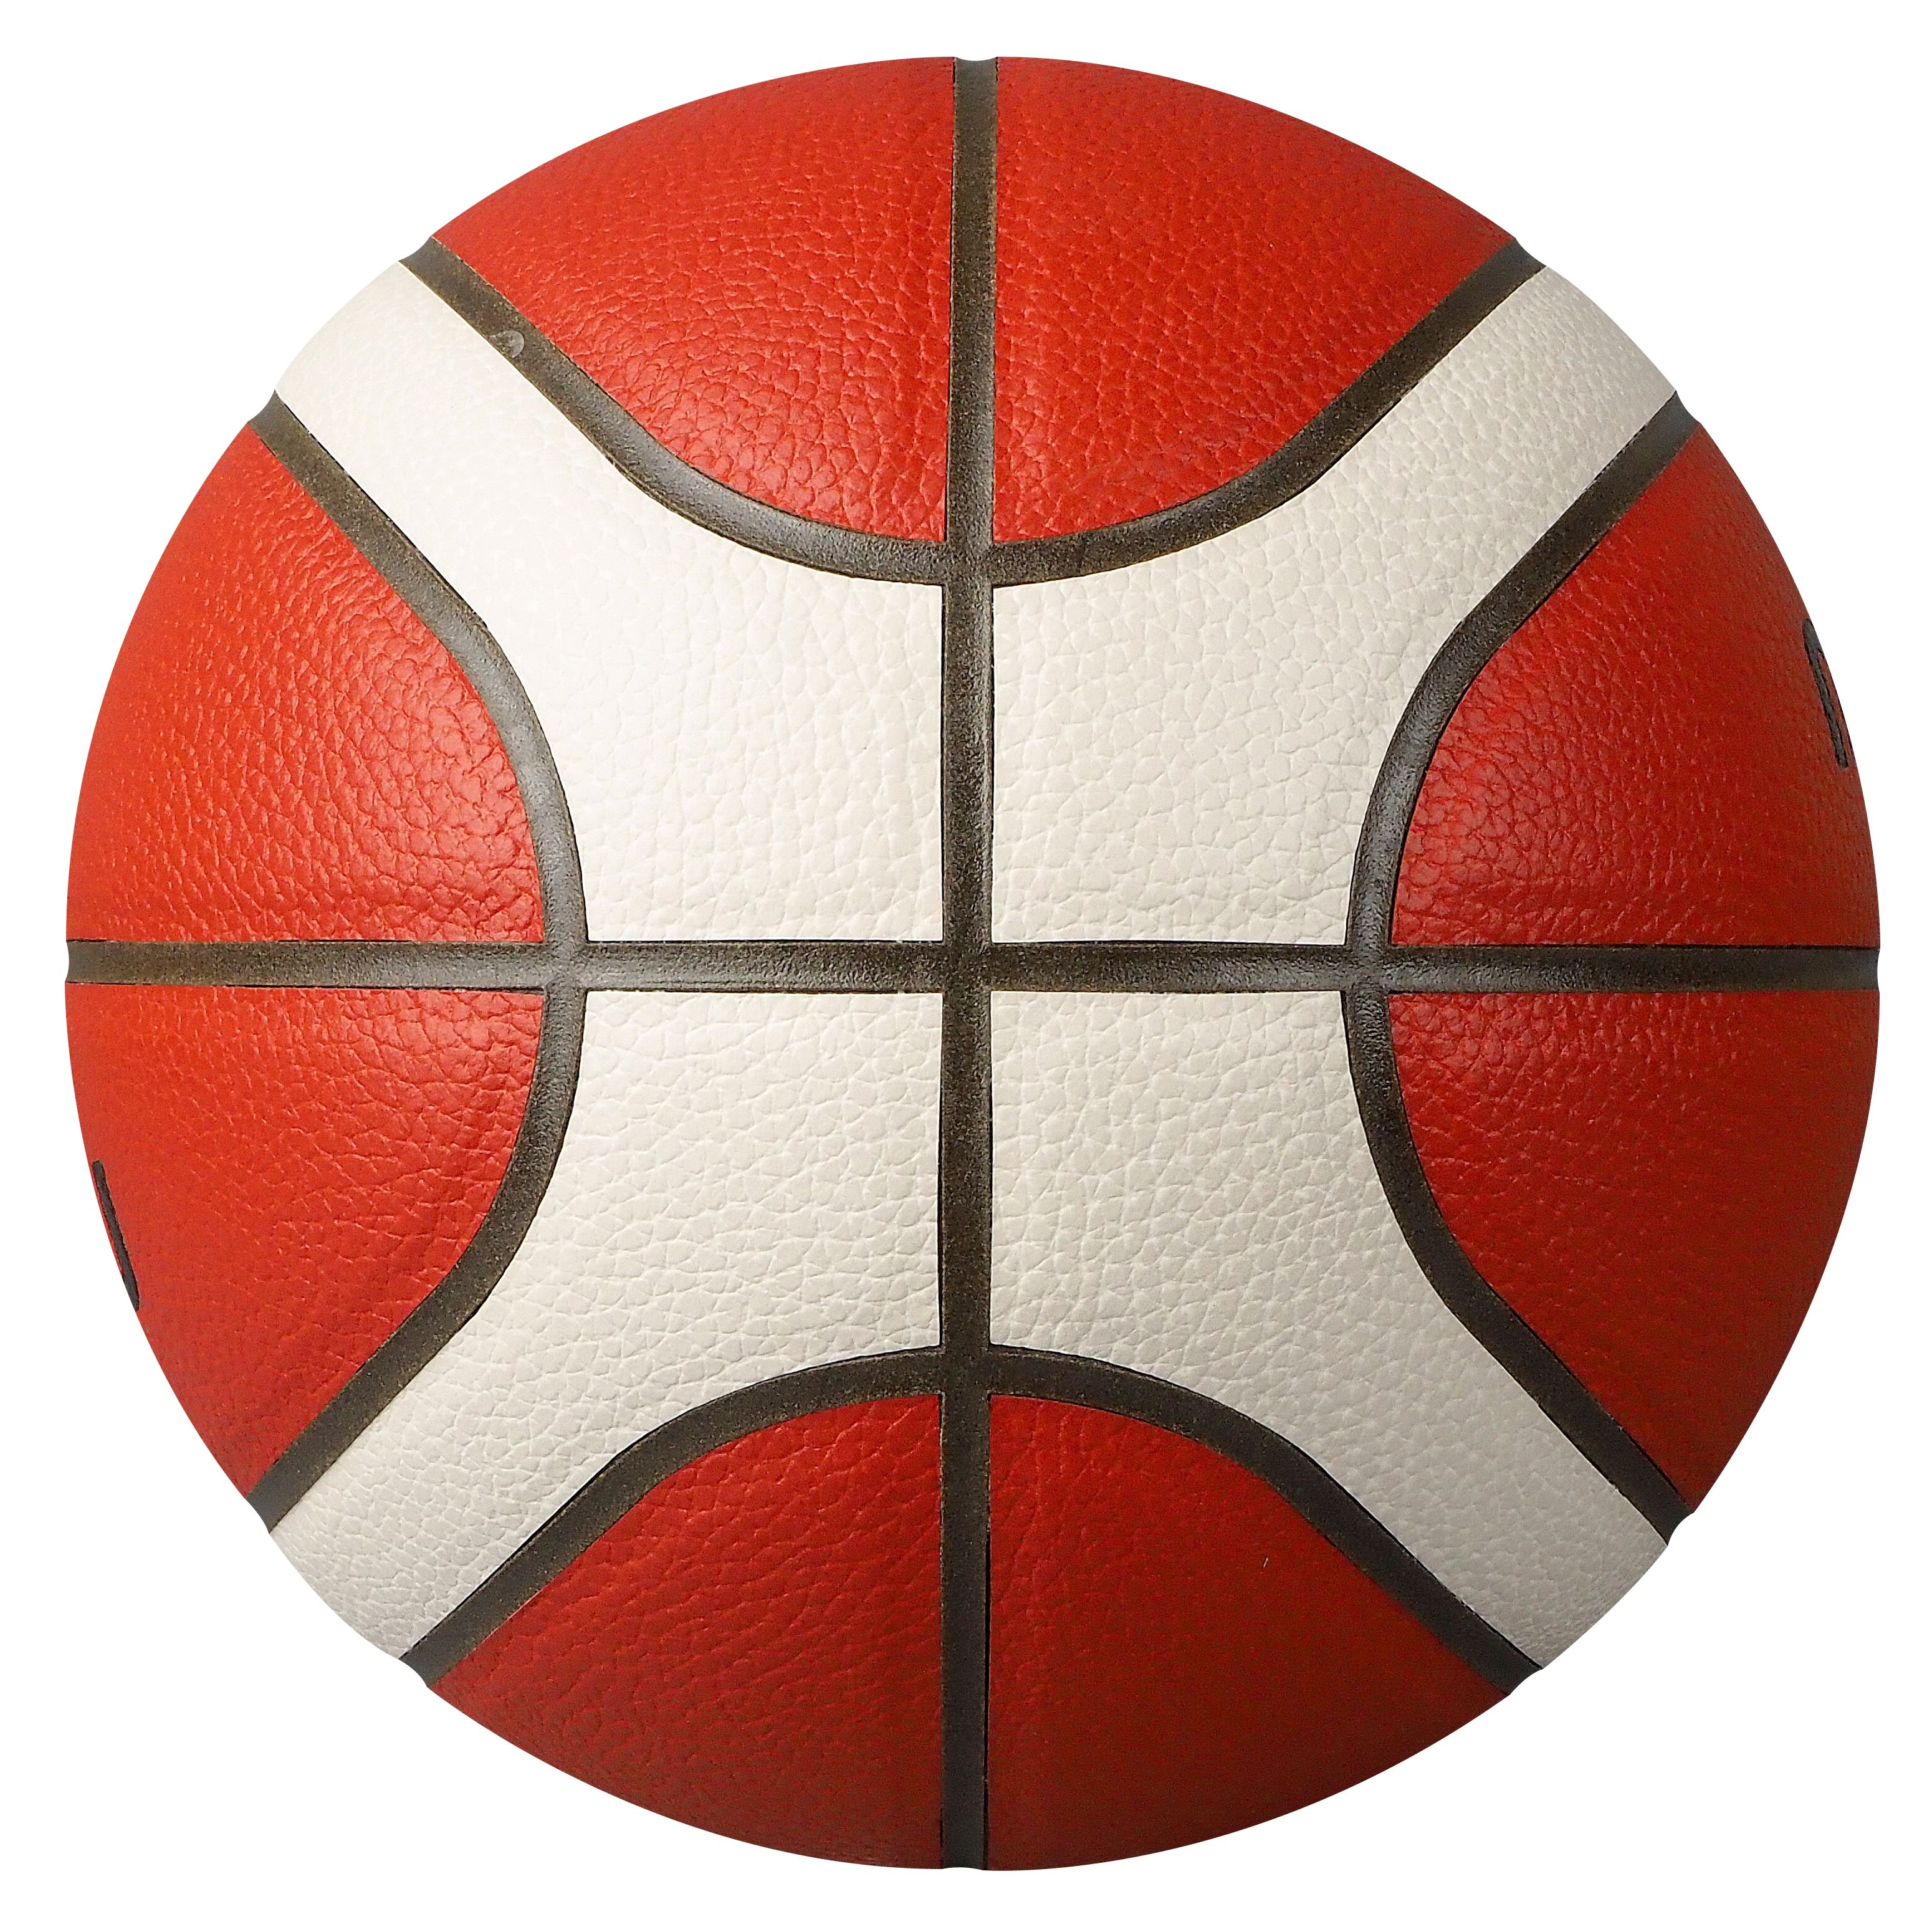 BG4500 Basketball 12 Panal Premium Composite Leather (Indoor)